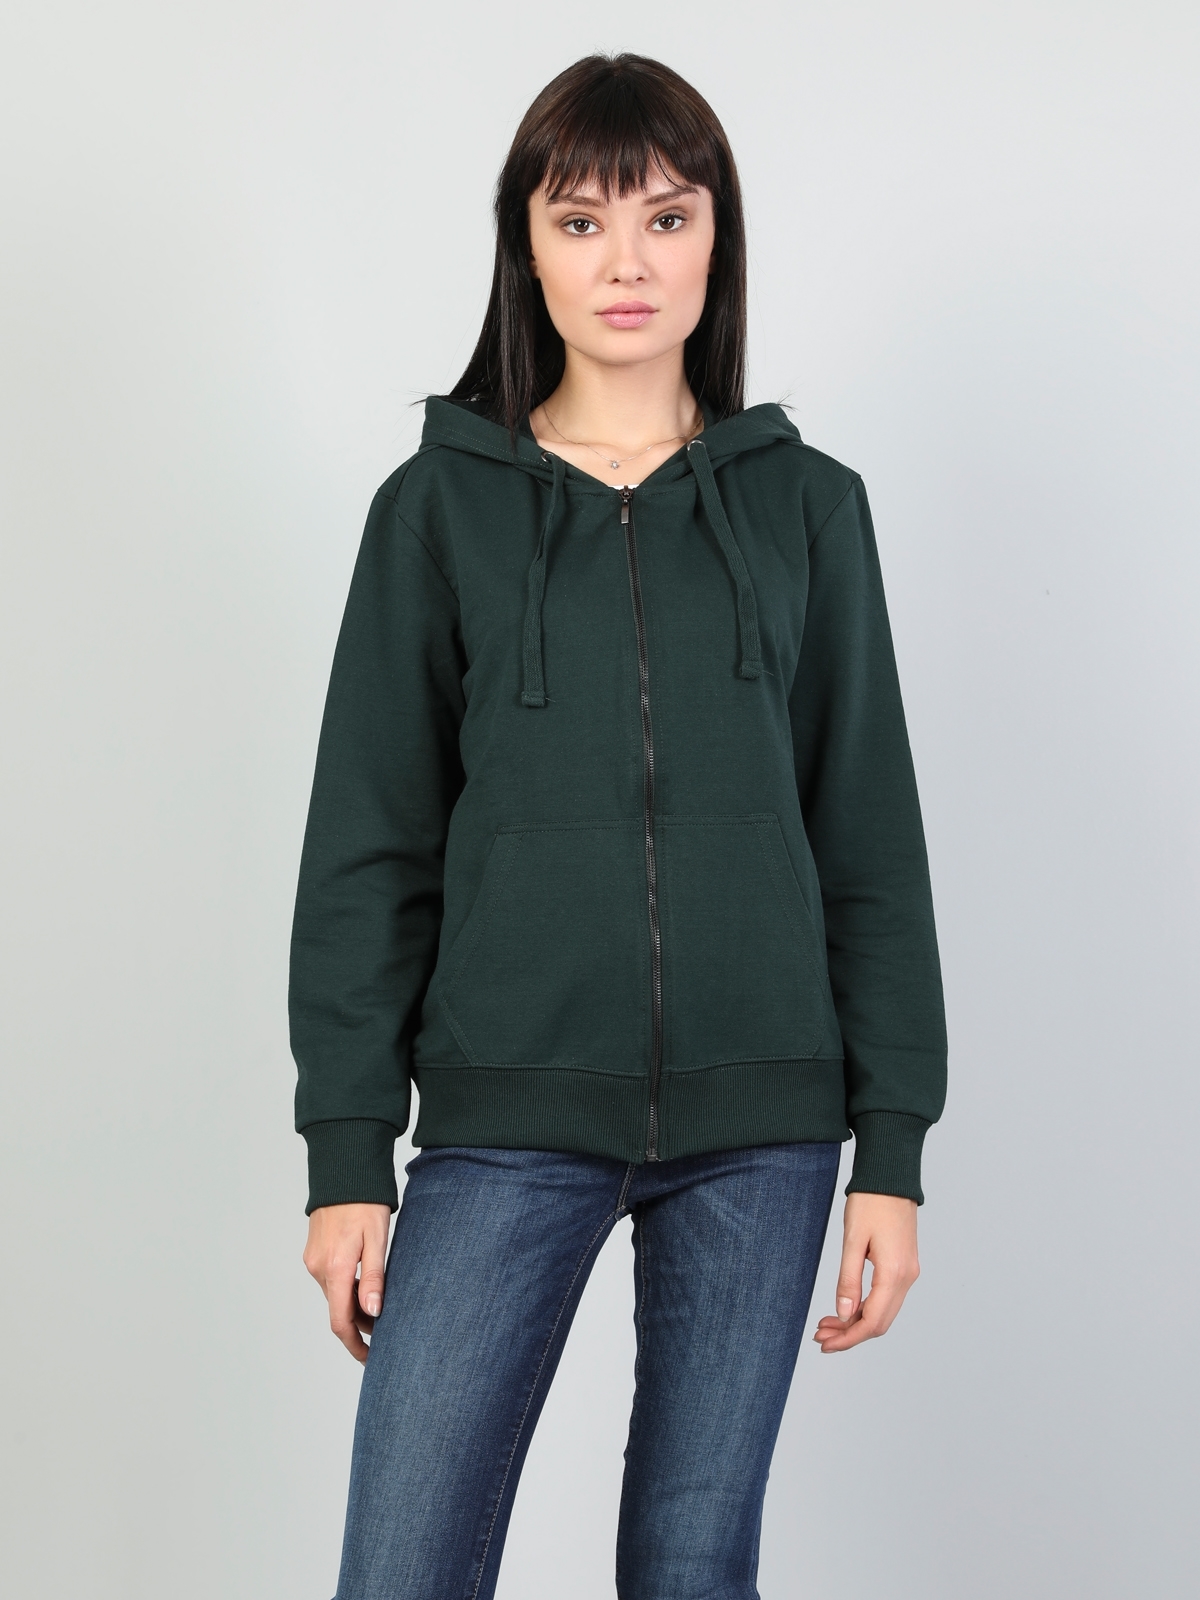  Comfort Fit  Kadın Yeşil Sweatshirt